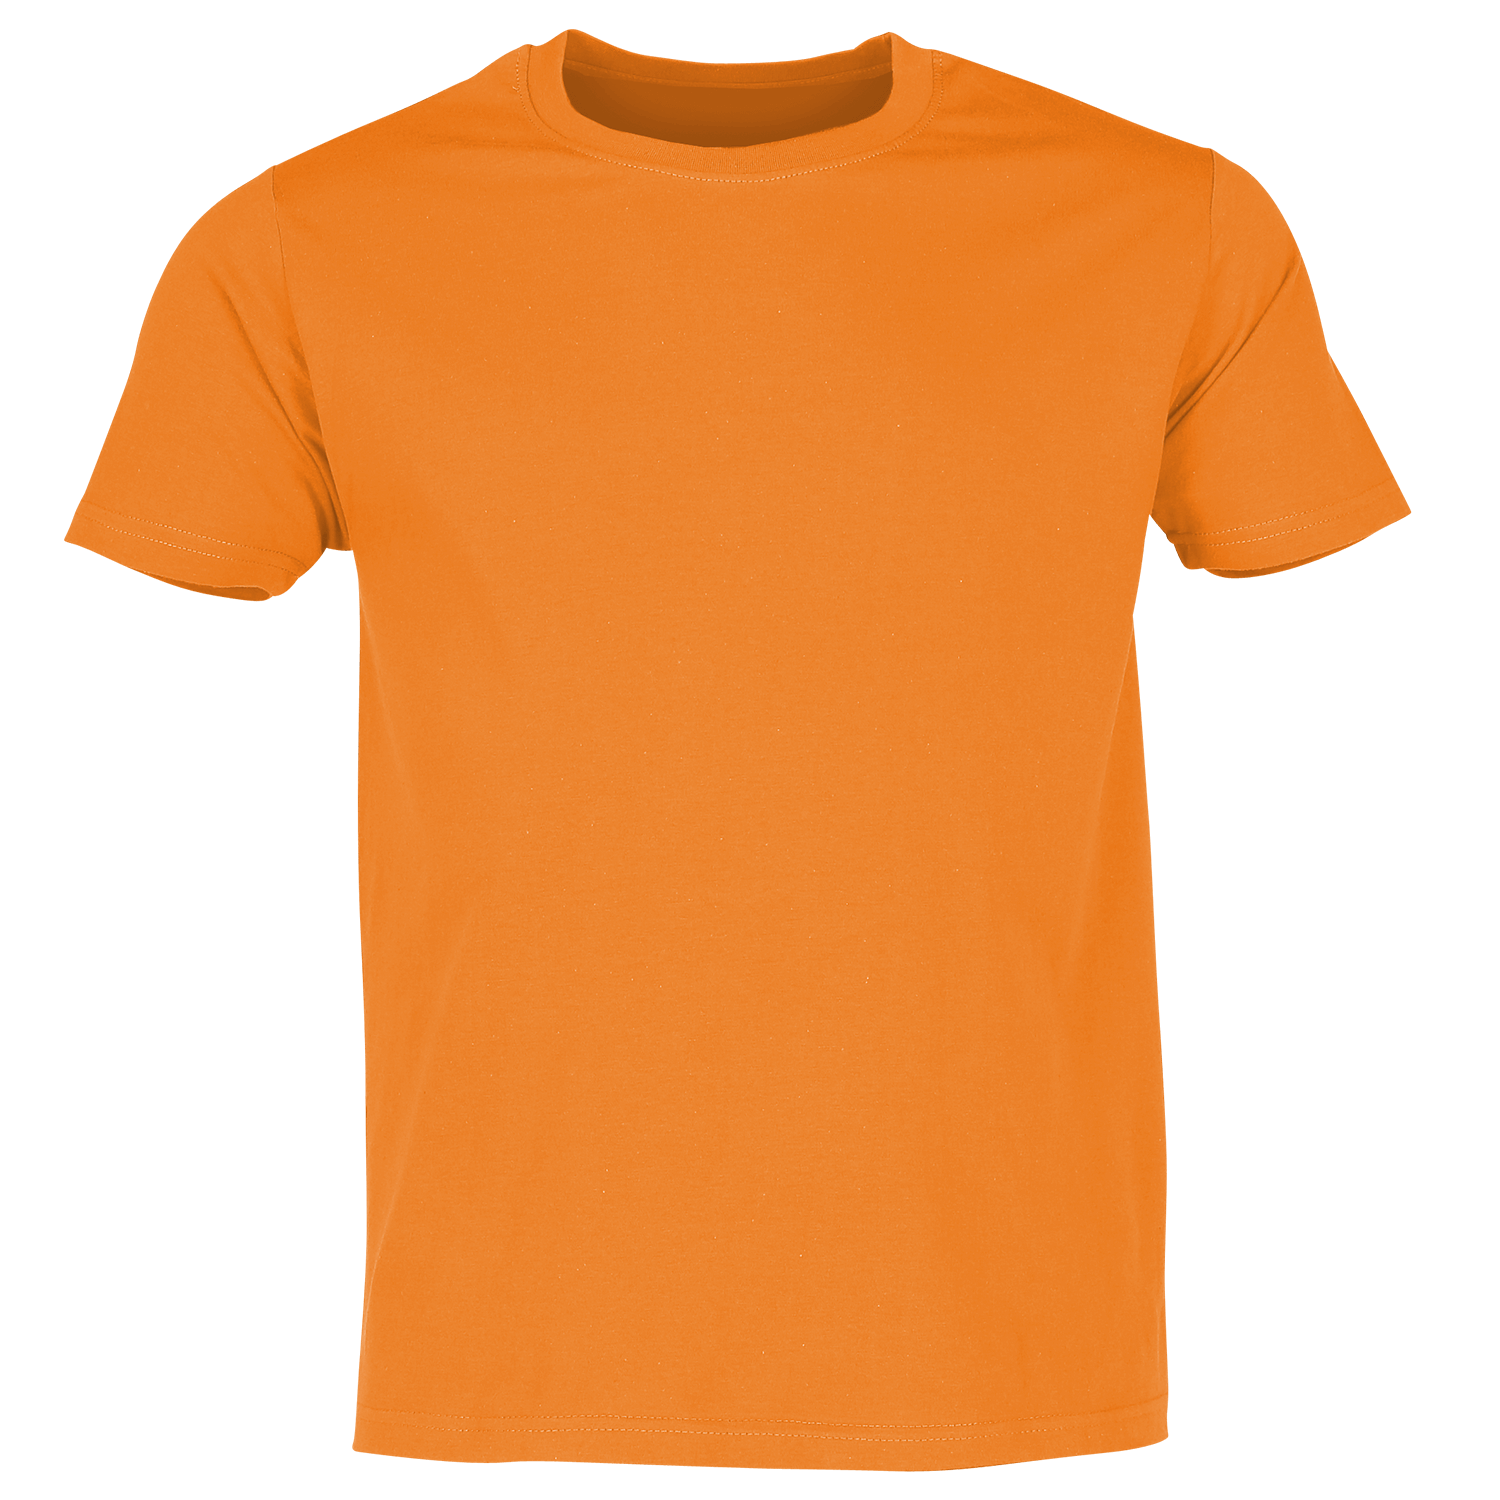 Shirt Orange PNG Photos